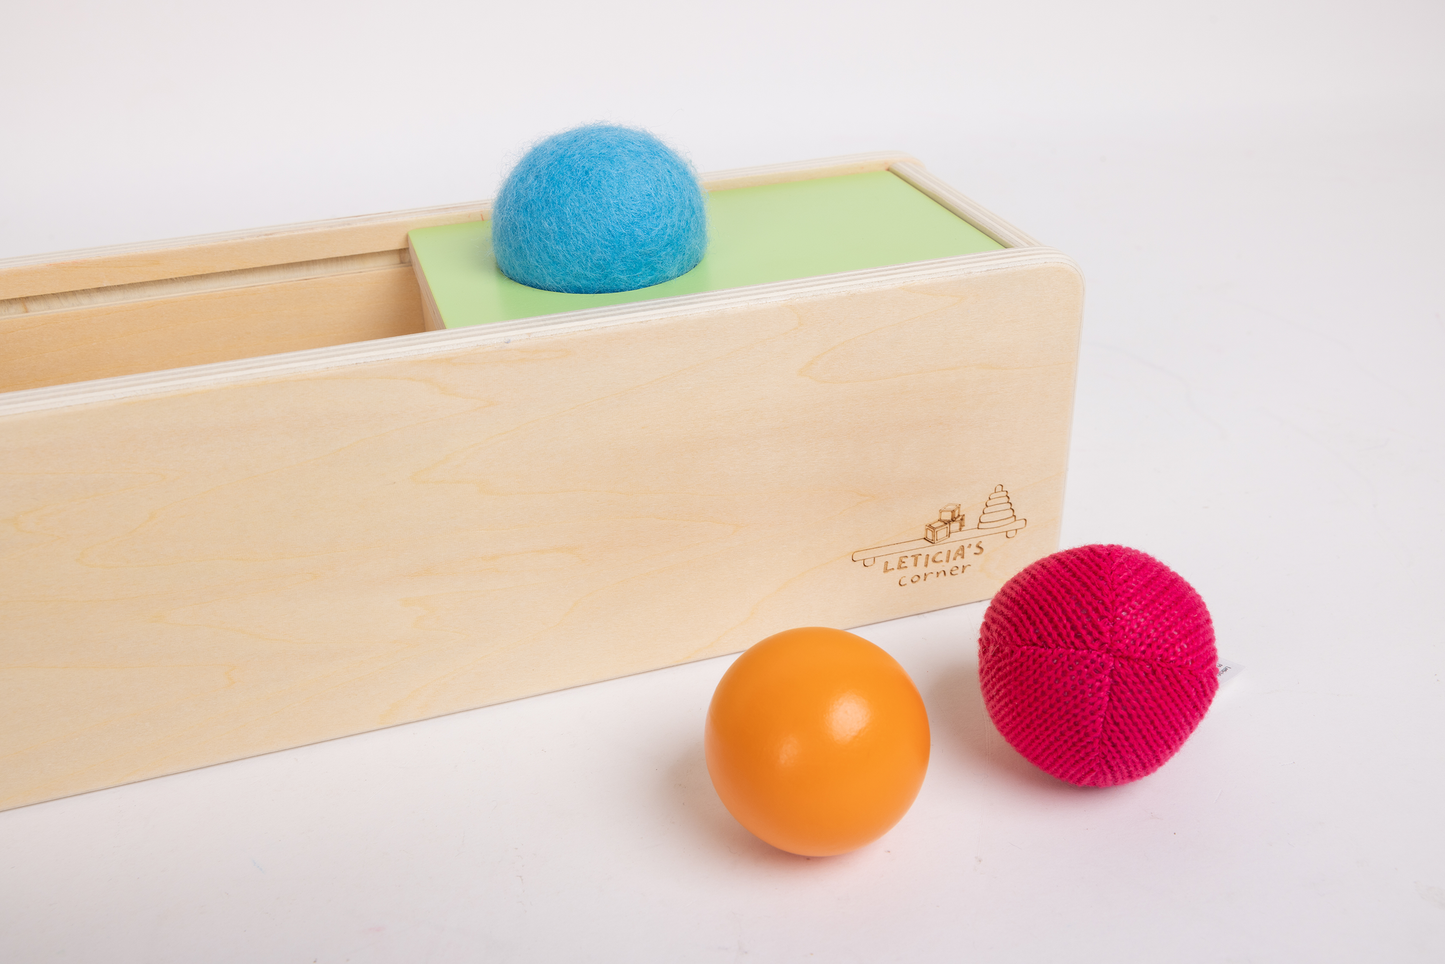 Montessori-Inspired Sliding Top Box